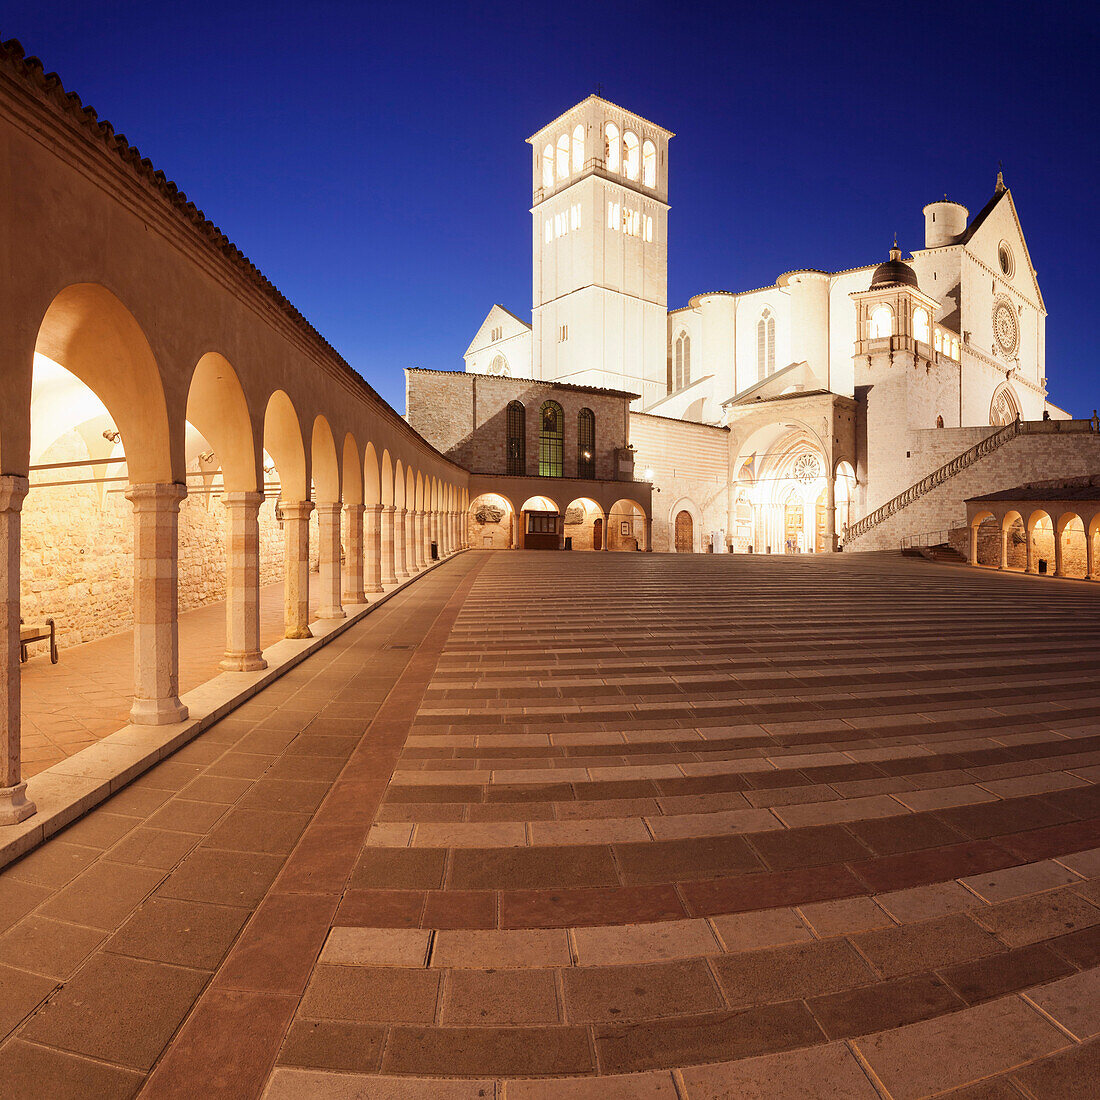 Basilica of San Francesco, UNESCO World Heritage Site, Assisi, Perugia District, Umbria, Italy, Europe